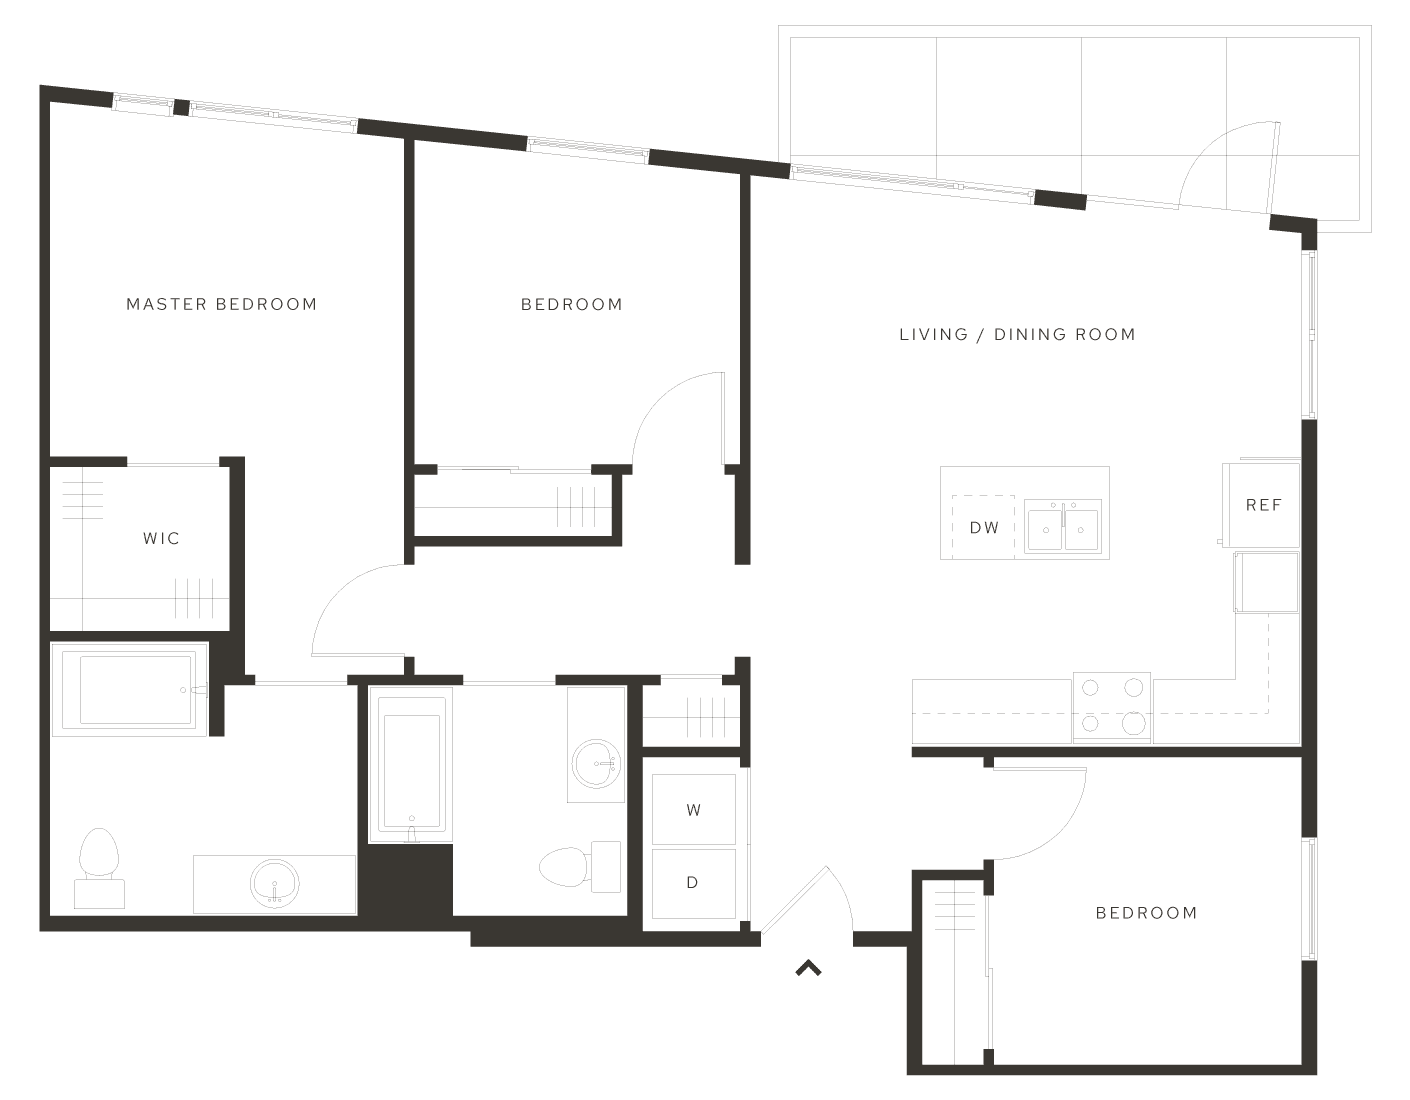 Luxury 3-bedroom apartment floor plan at Avia Salt Lake City